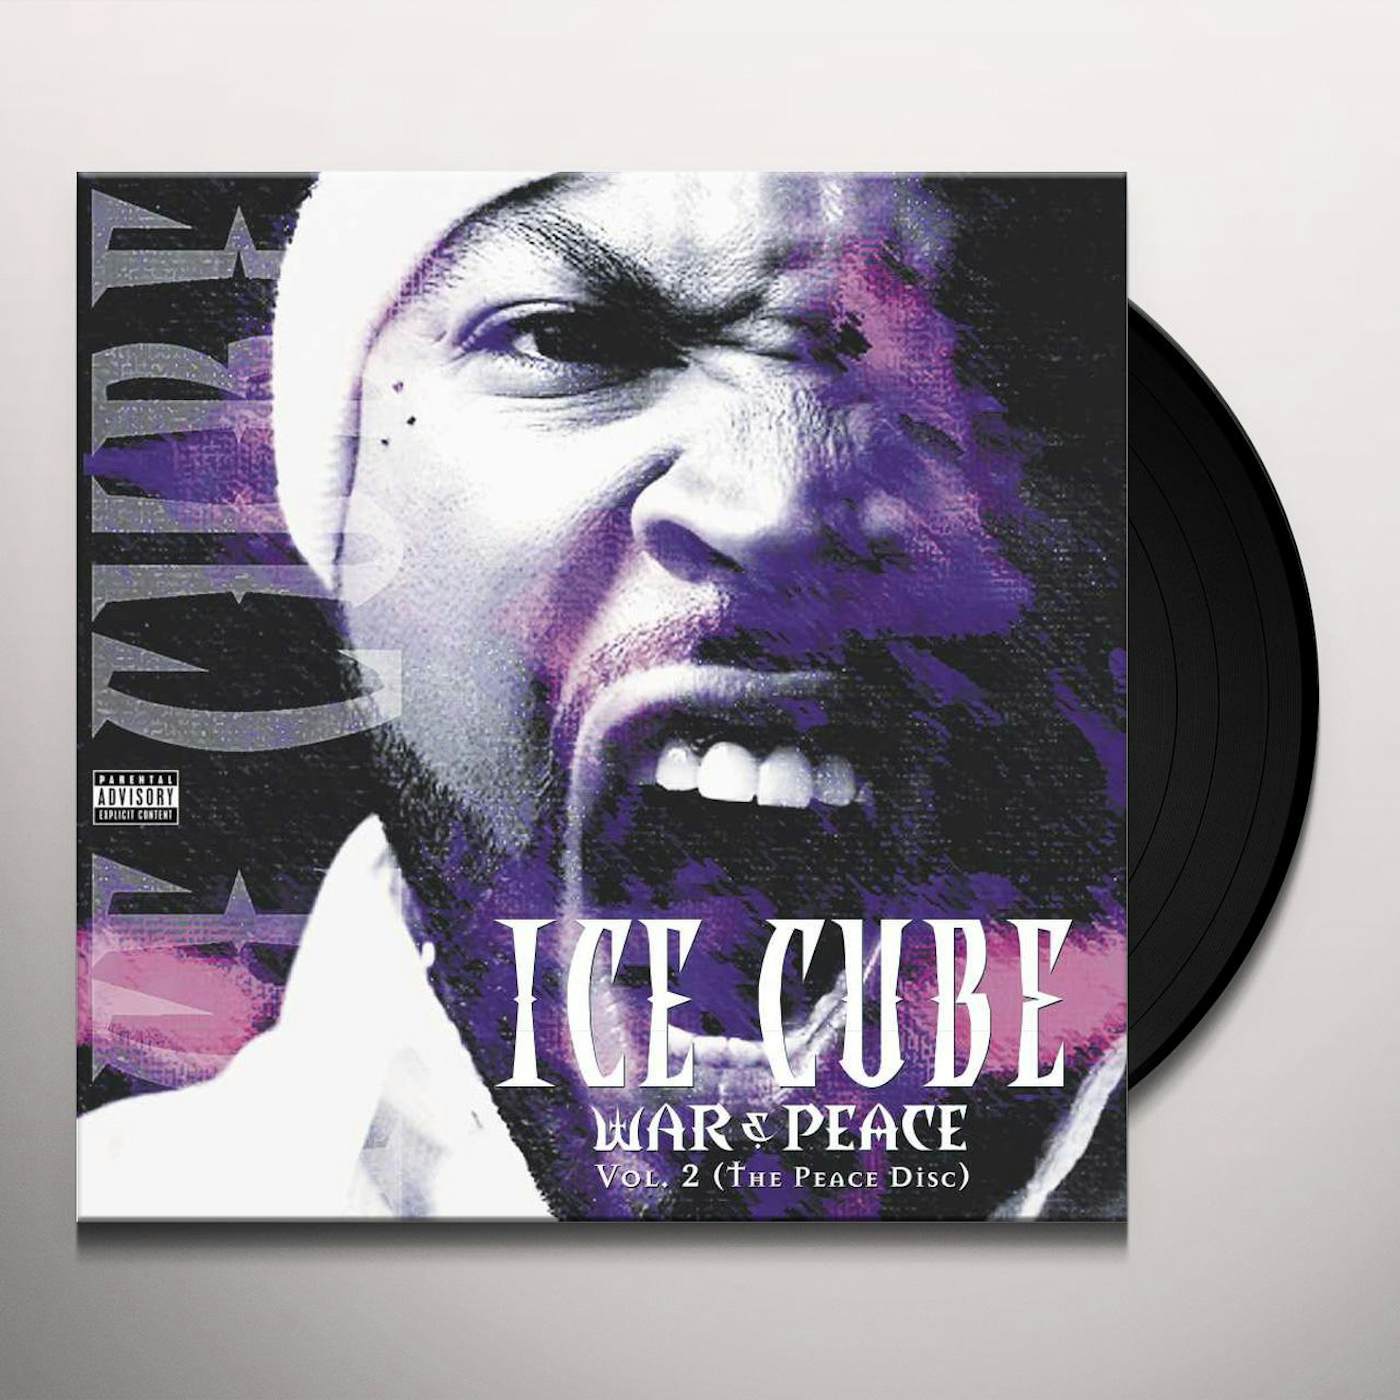 ICE MC – Disco Collection (2001, CD) - Discogs